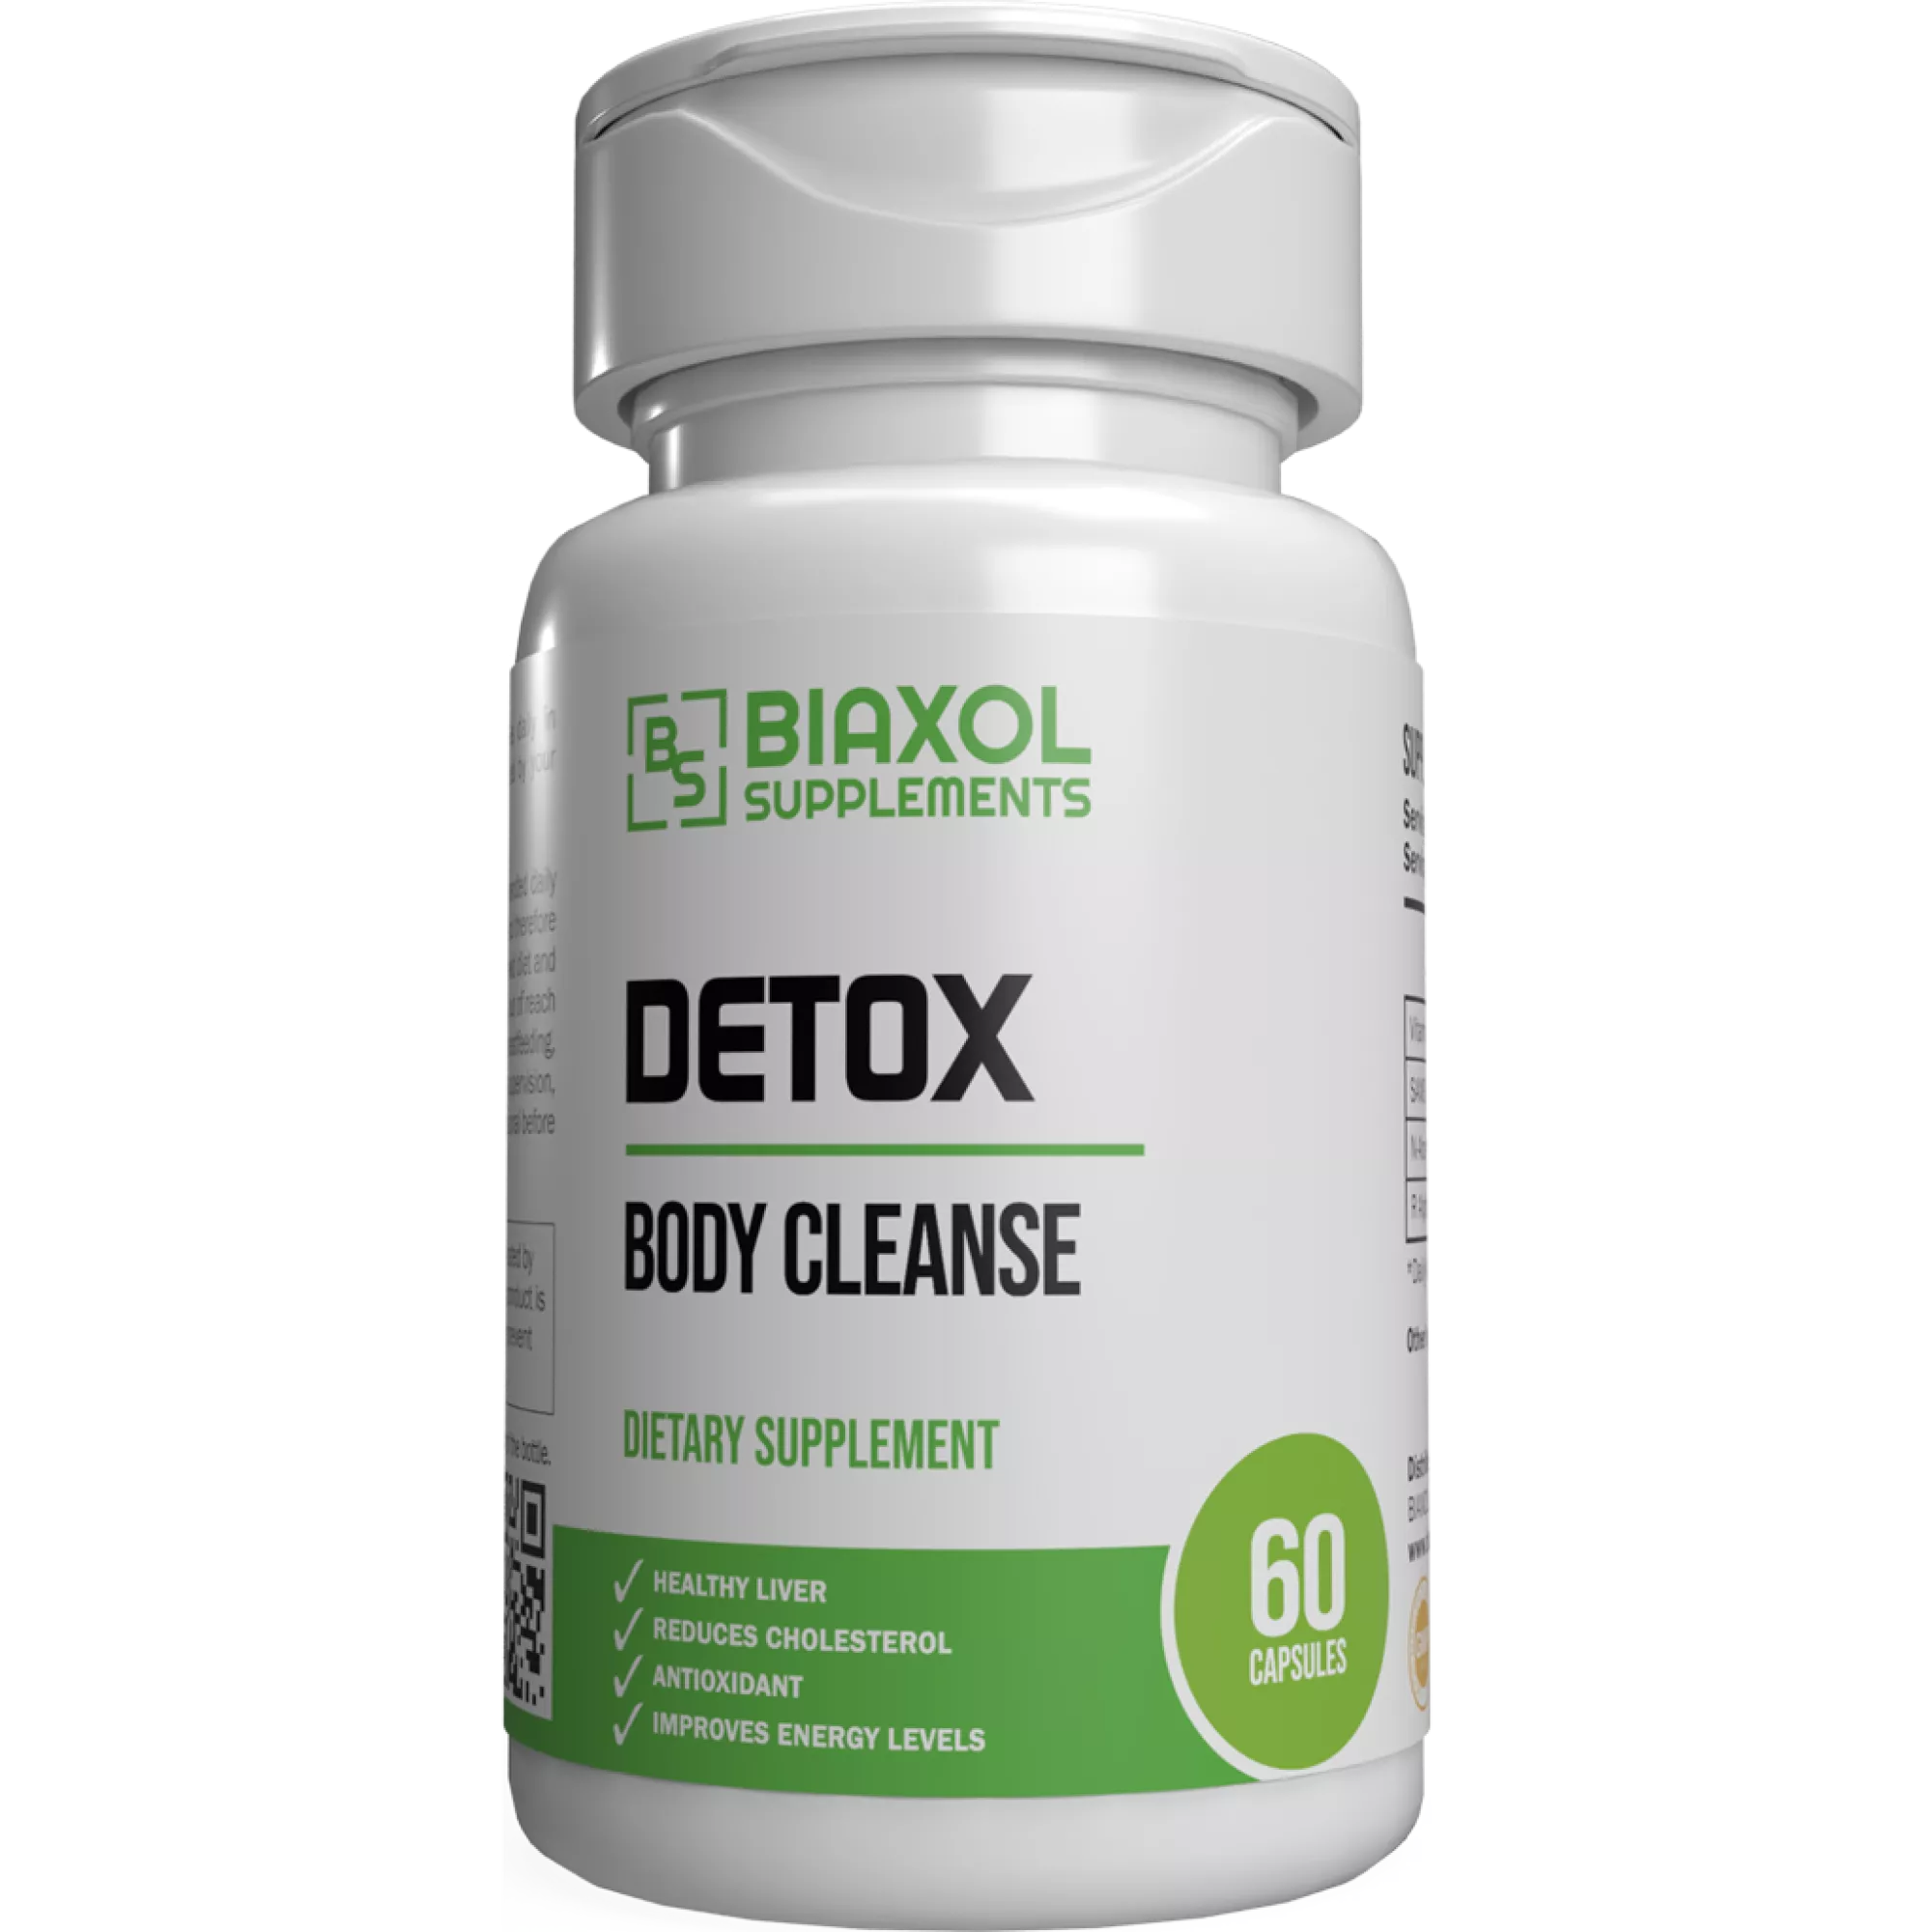 DETOX (Body Cleanse), Biaxol, Buy Steroids Online - www.deuspower.shop